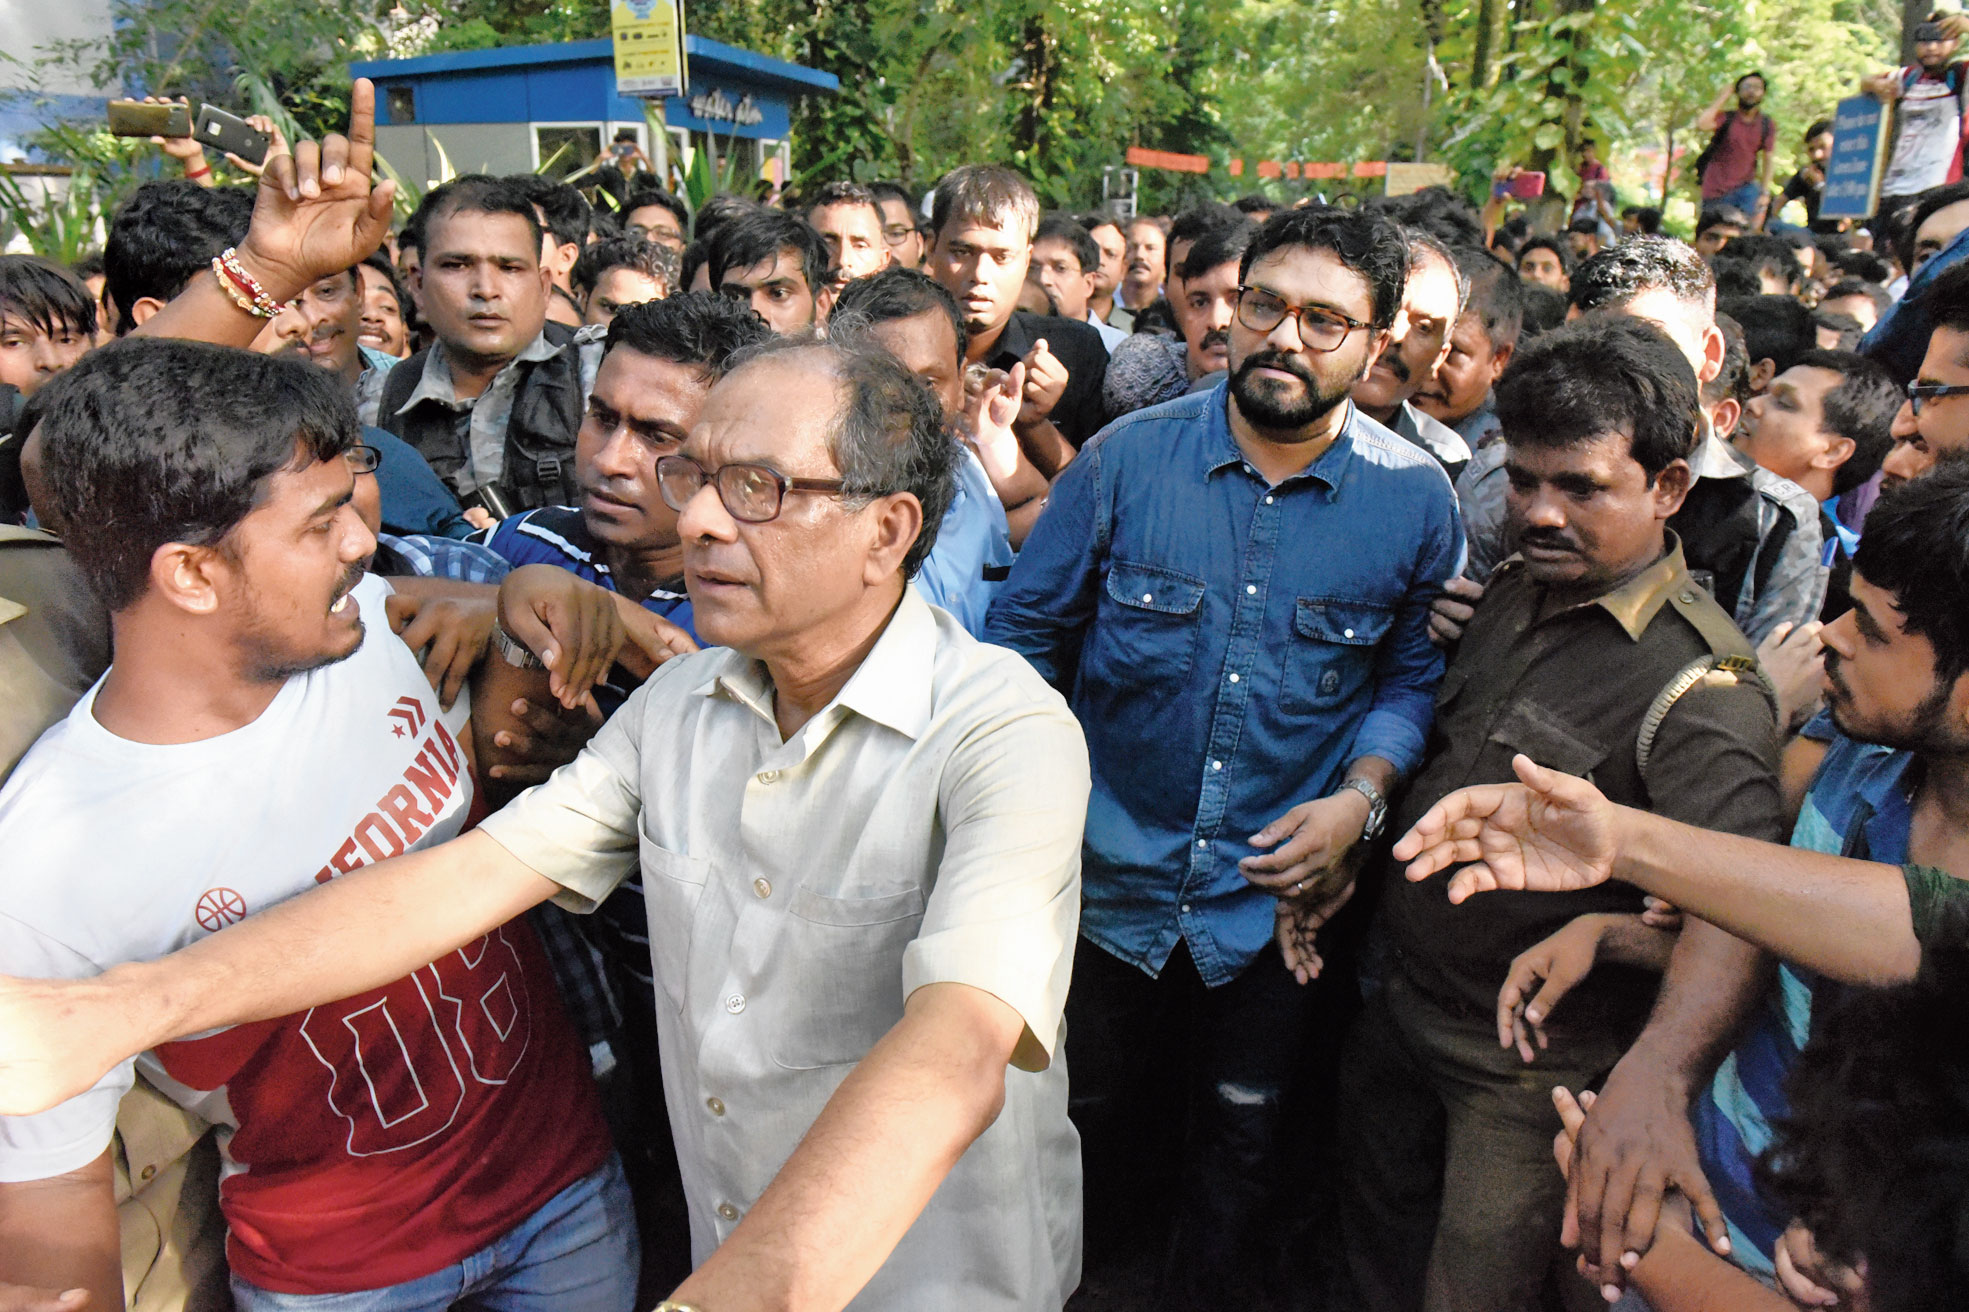 Vice-chancellor Suranjan Das makes way for Union minister Babul Supriyo to enter the auditorium on Thursday